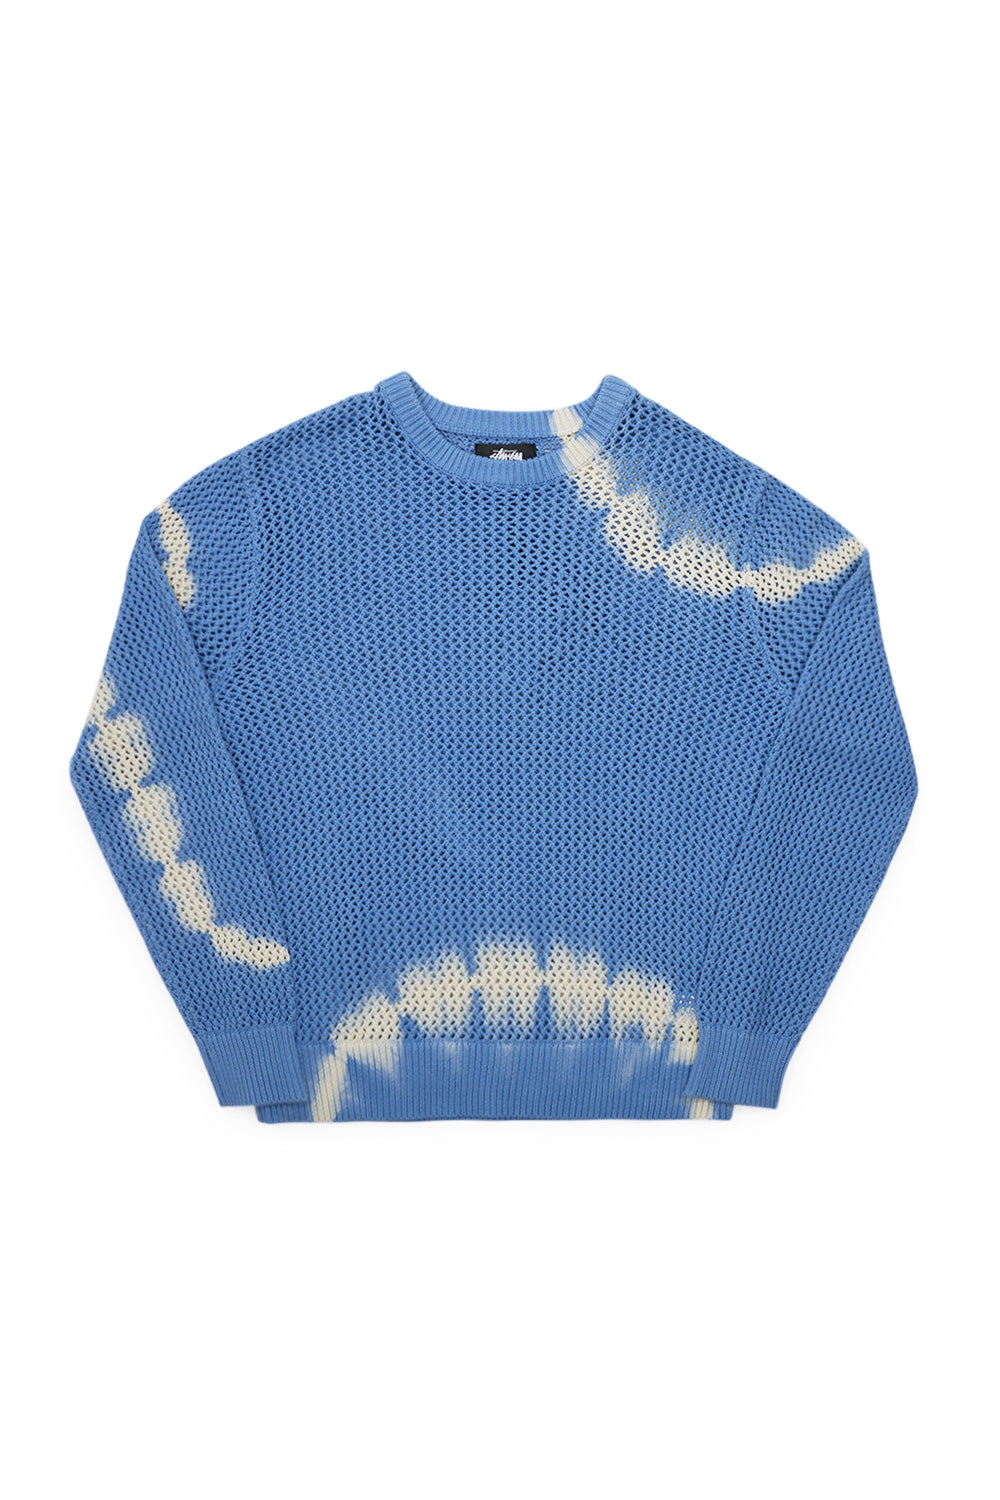 Stussy Pigment Dyed Loose Gauge Sweater Tie Dye Blue - BONKERS